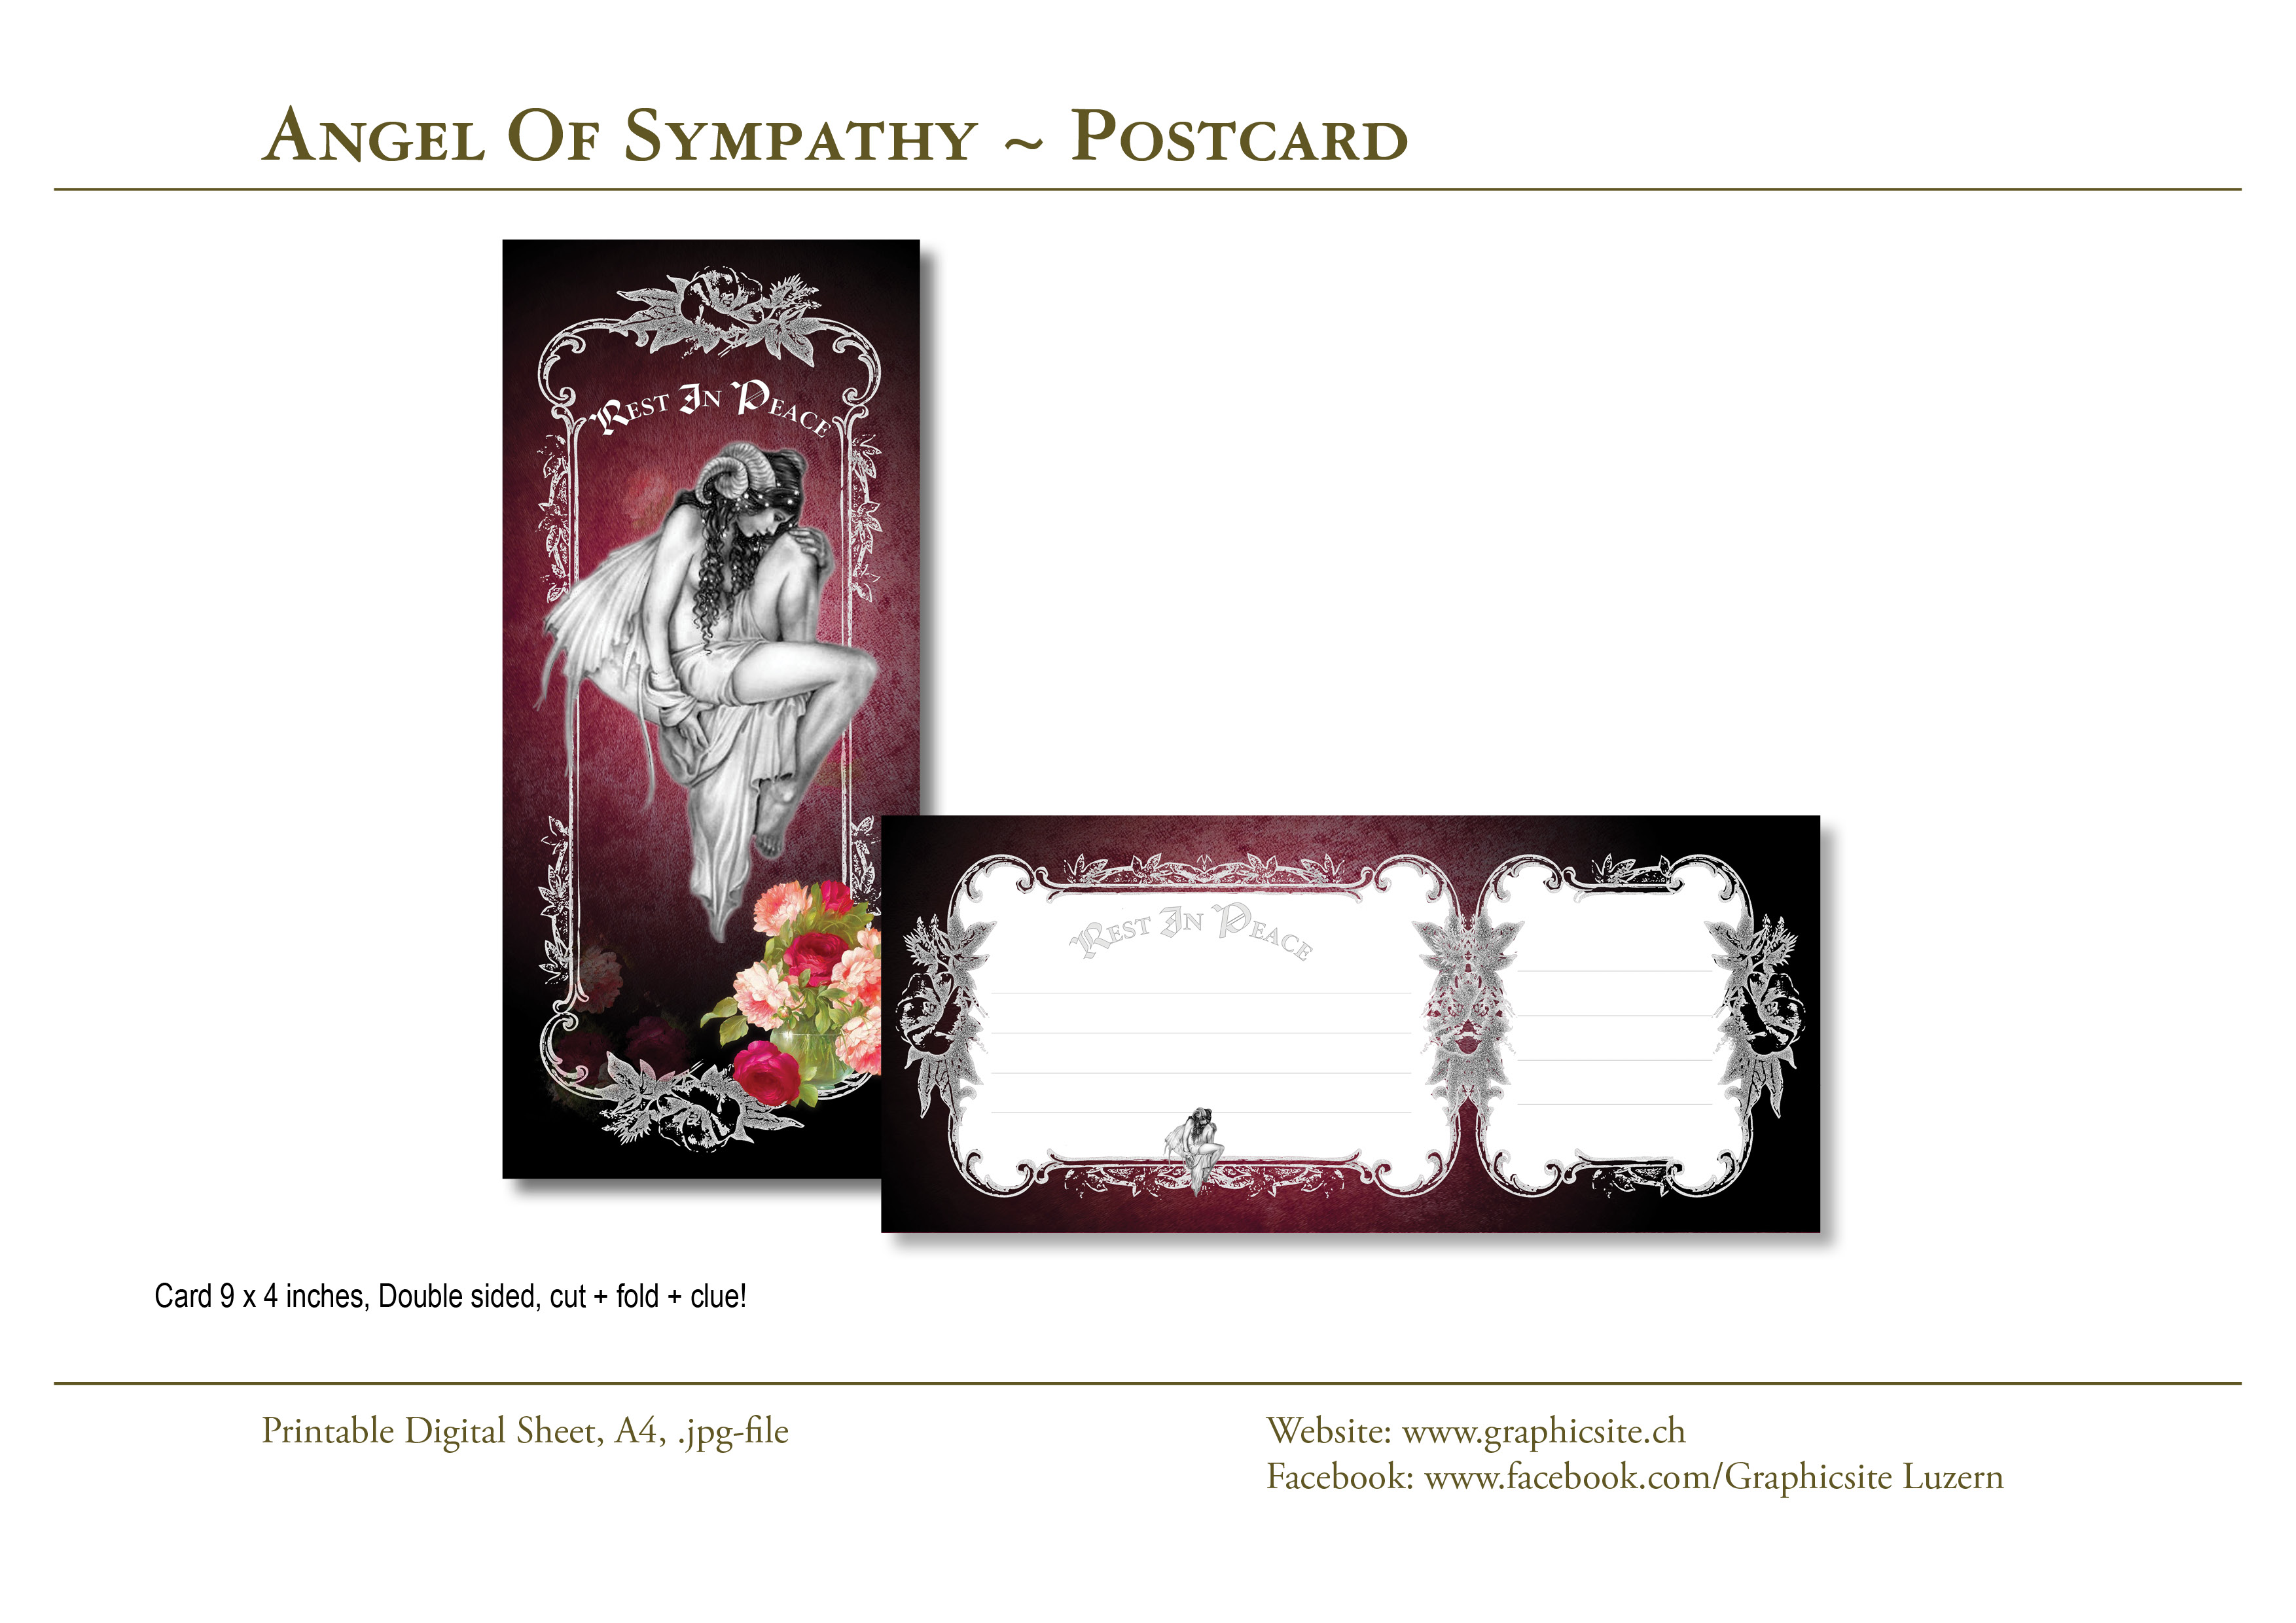 Karten selber drucken - Trauerkarten - Angel Of Sympathy - #trauer, #karten, #selber, #drucken, #engel, #postkarte, #basteln, #beileid, #tod, #kondulenzkarten